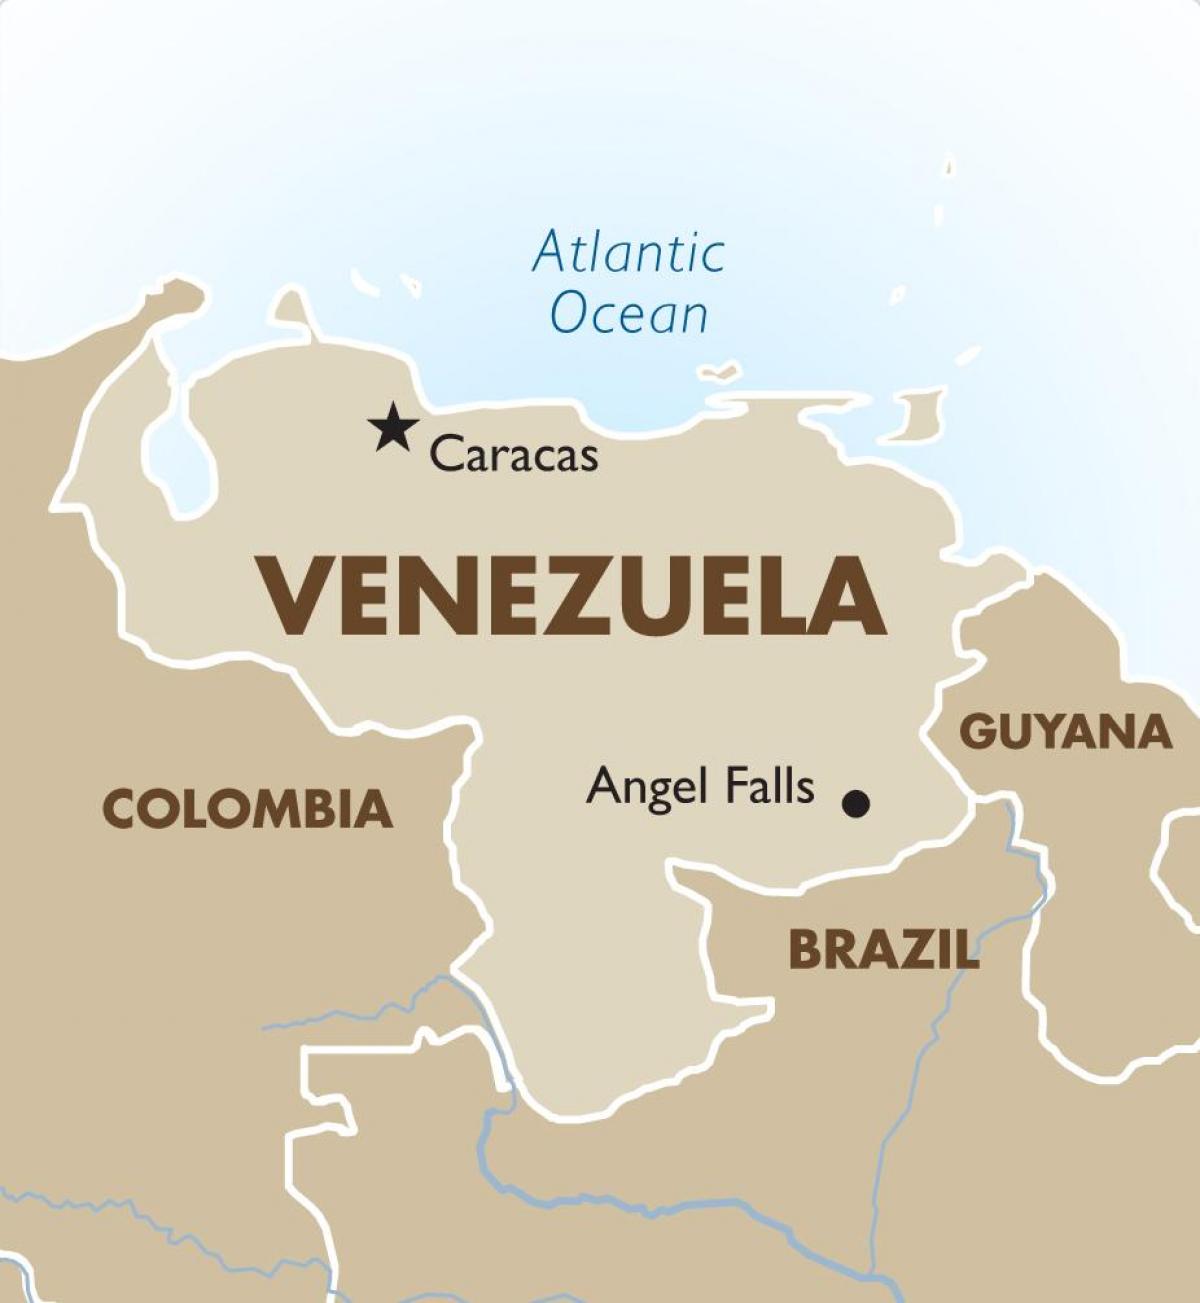 Венецуела карта на столицата